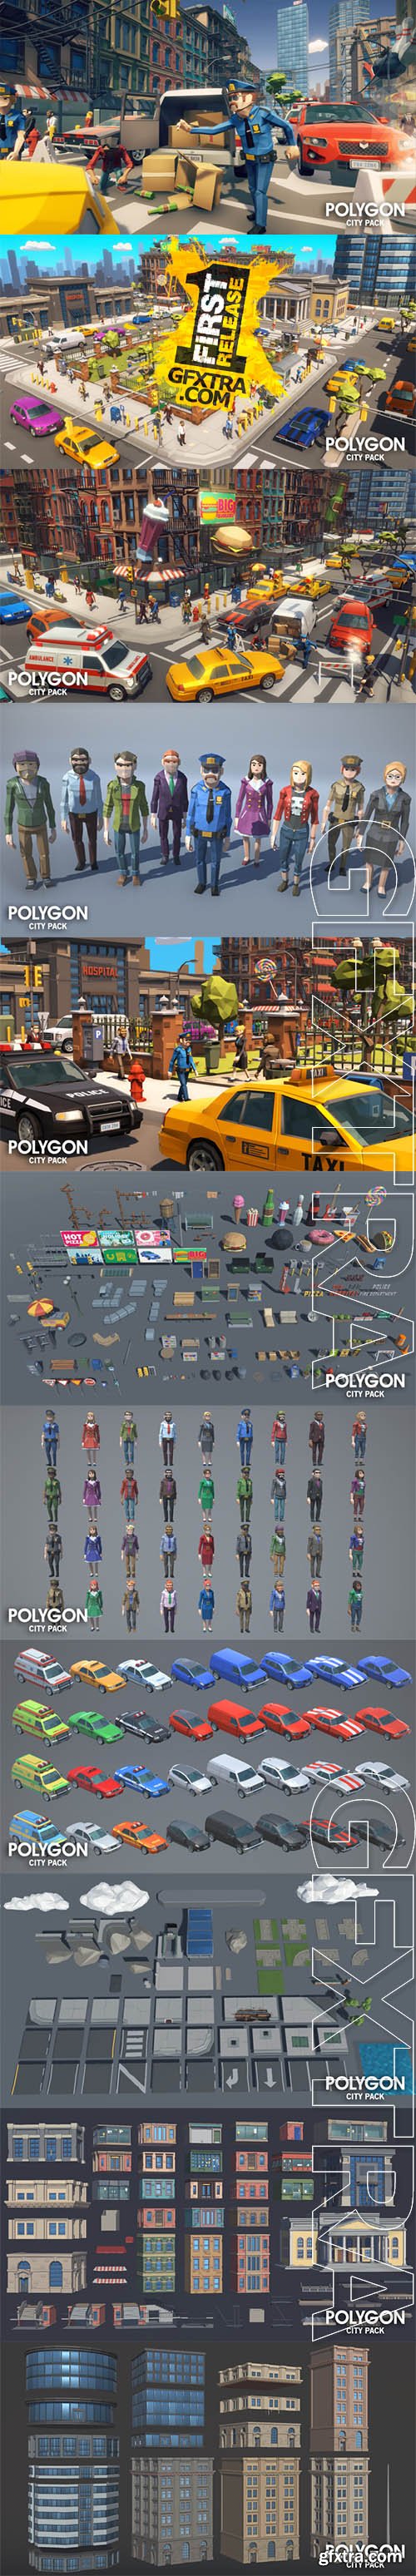 POLYGON City Pack v1.2